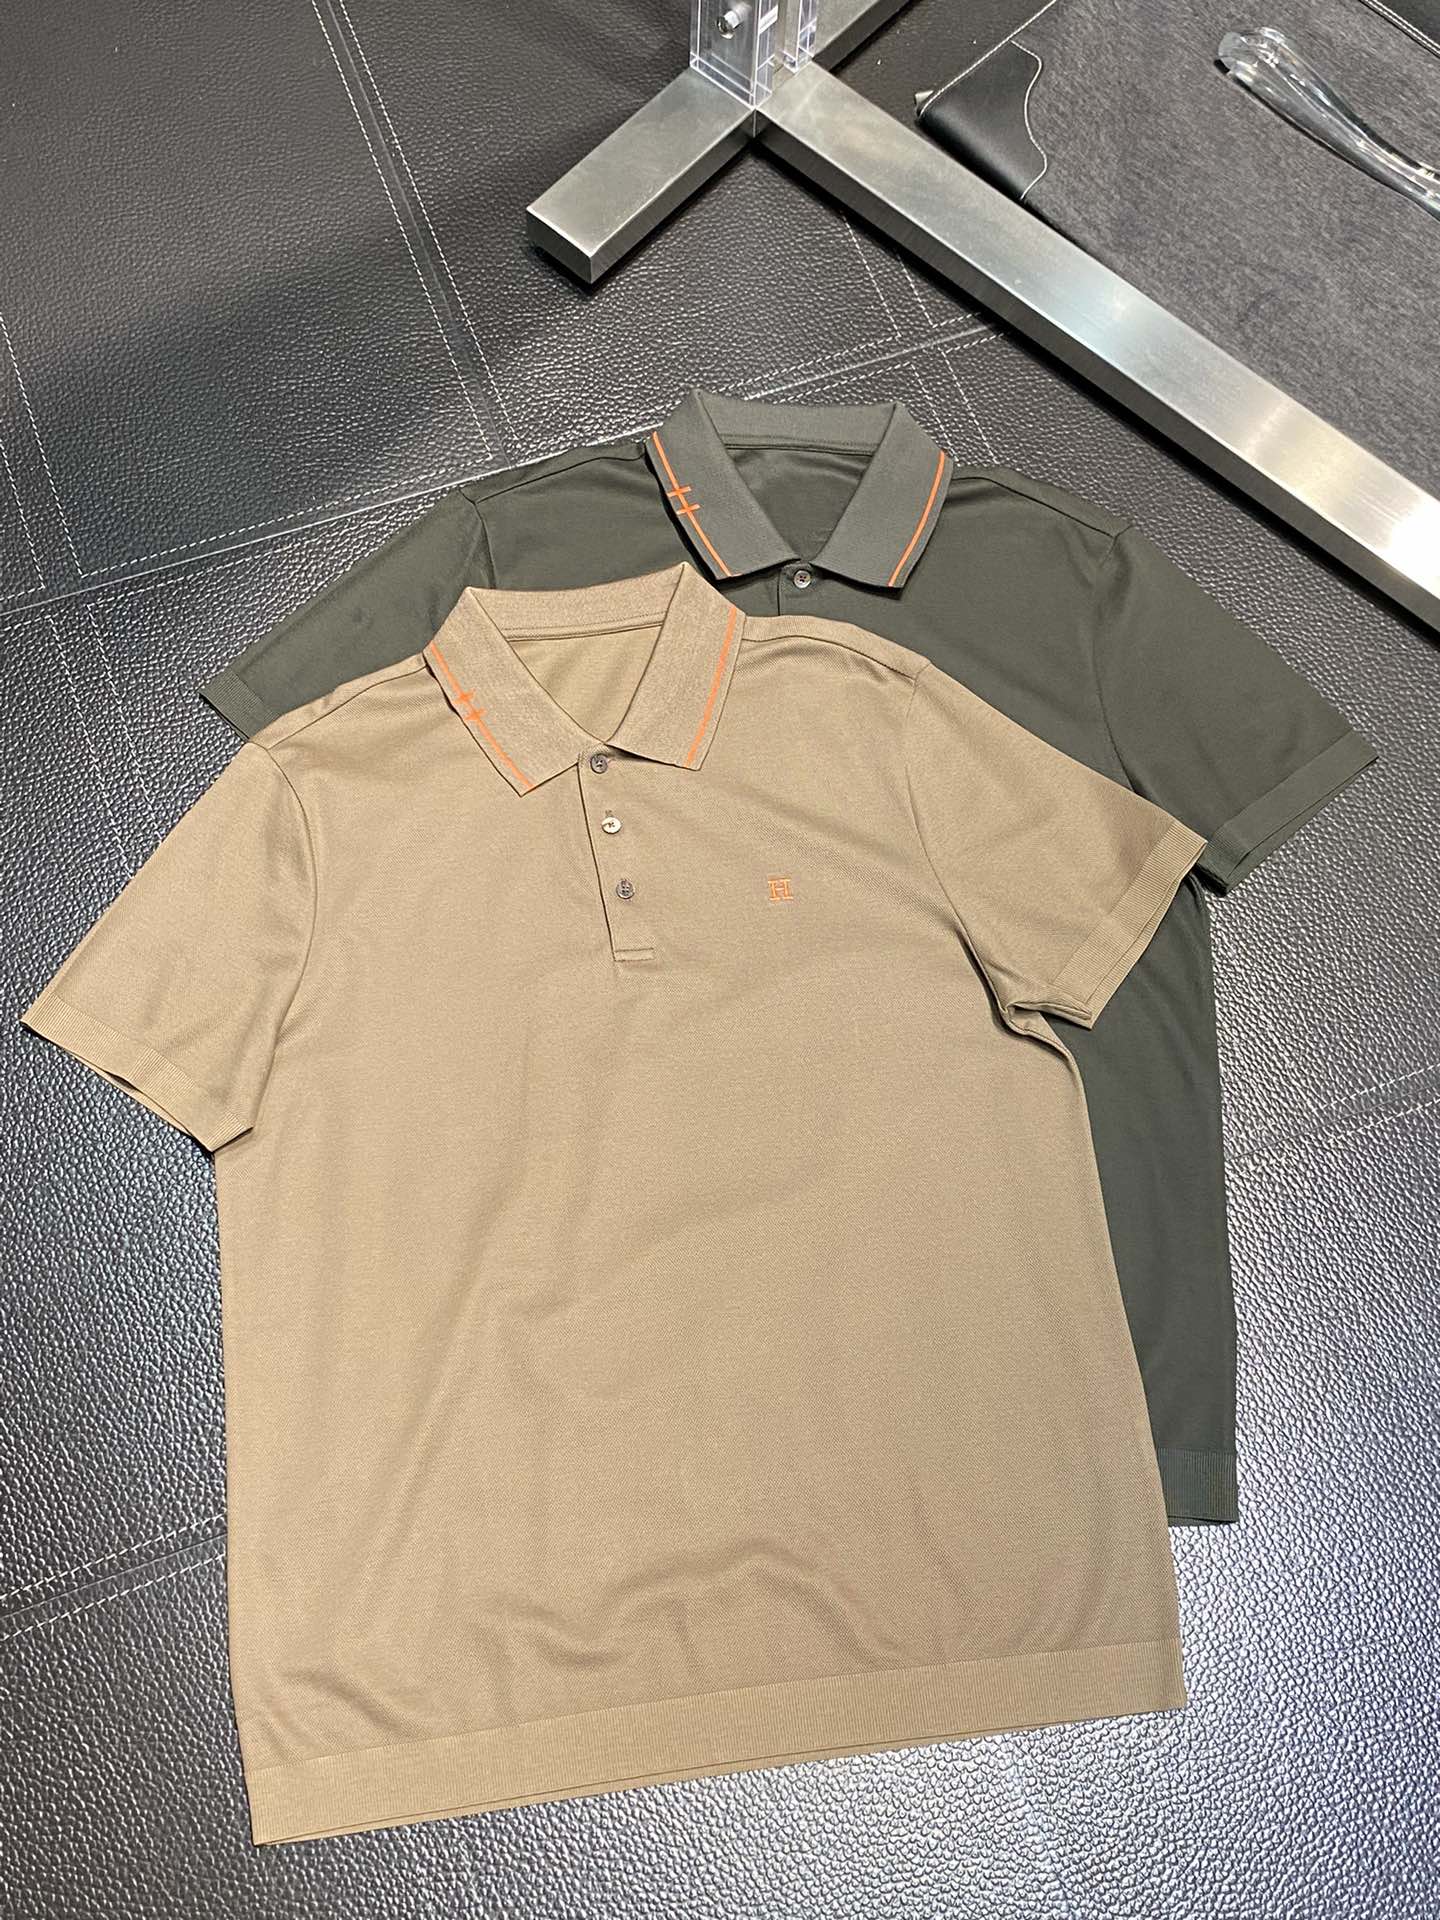 Hermes Clothing Polo T-Shirt Men Fashion Short Sleeve